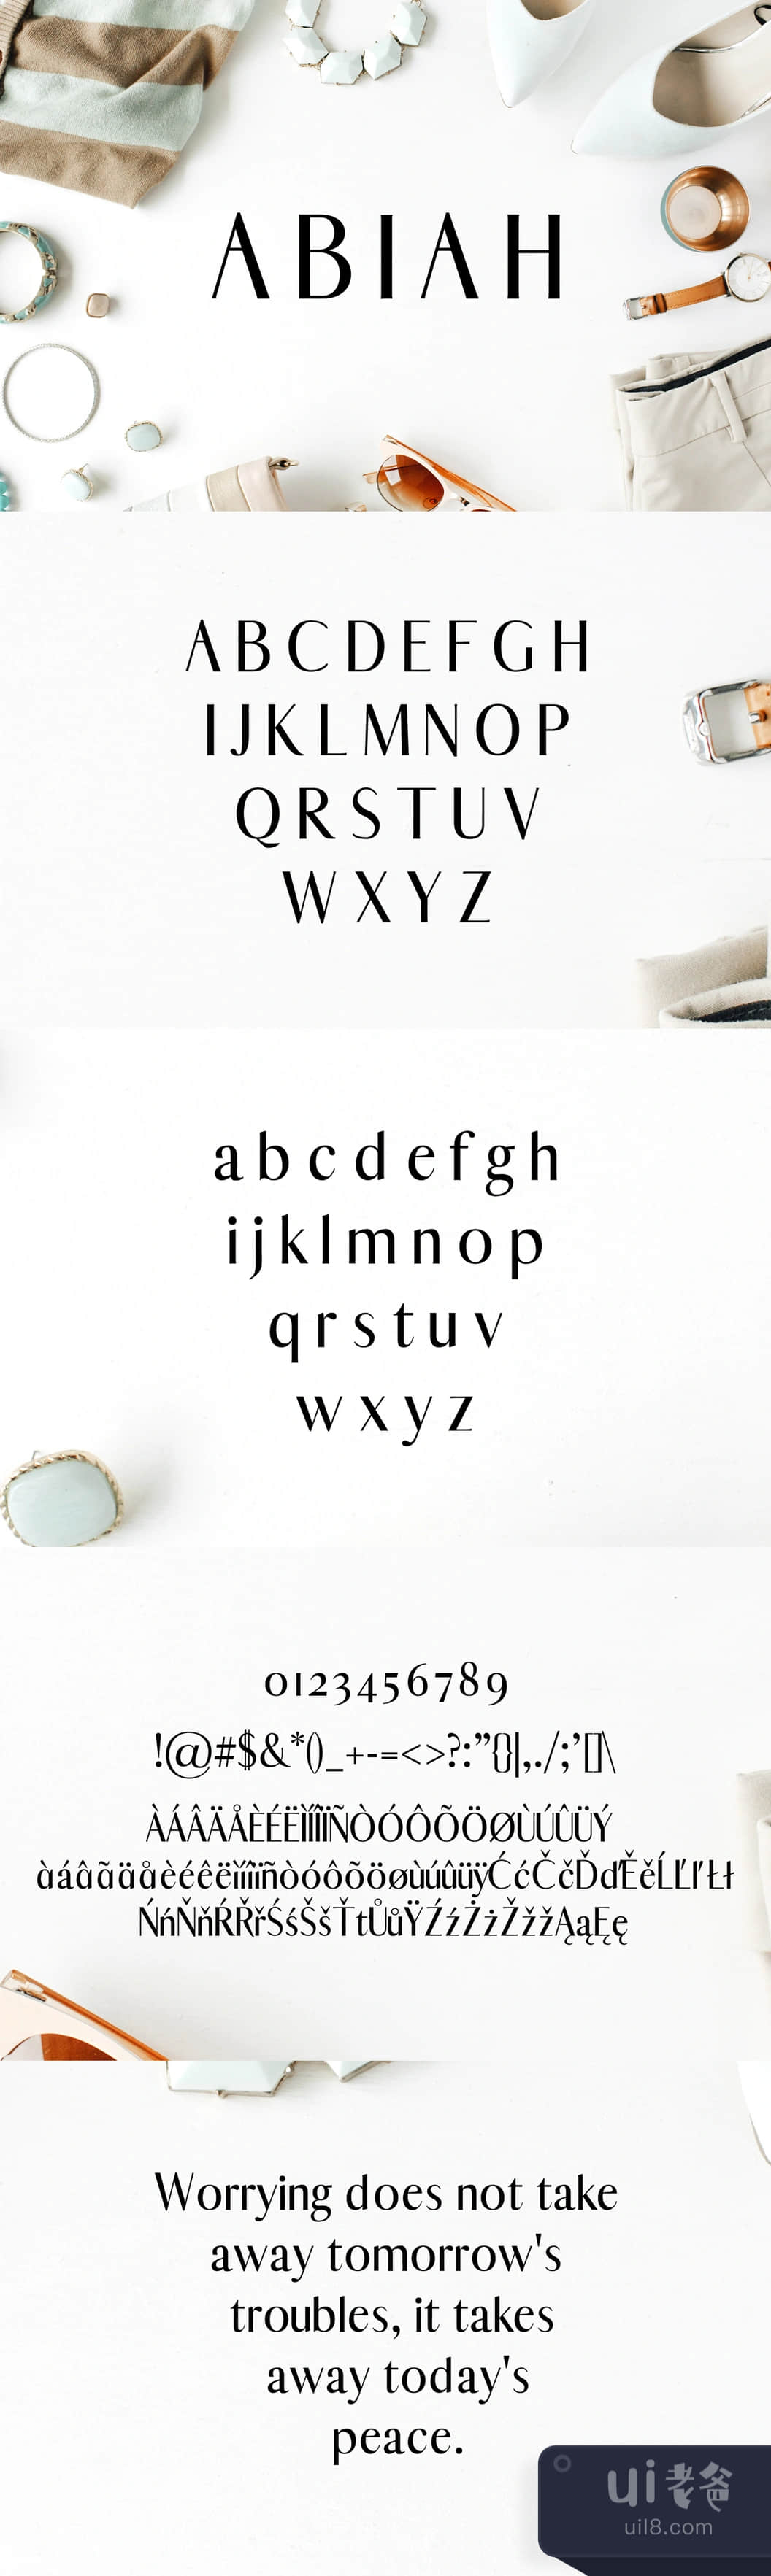 Abiah无衬线字体 (Abiah Sans Serif Typeface)插图1